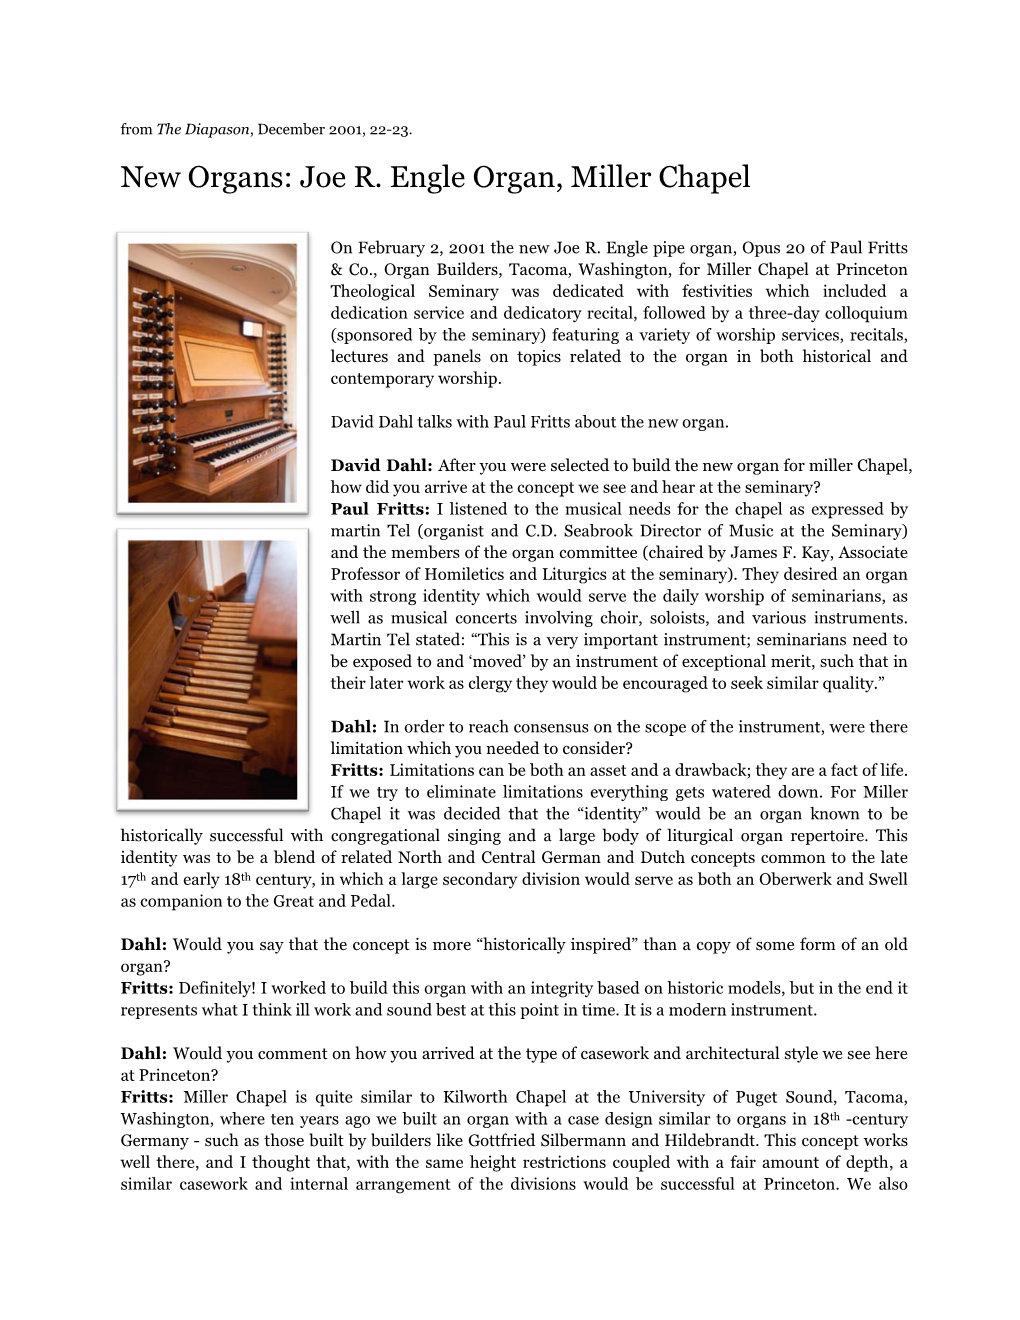 New Organs: Joe R. Engle Organ, Miller Chapel